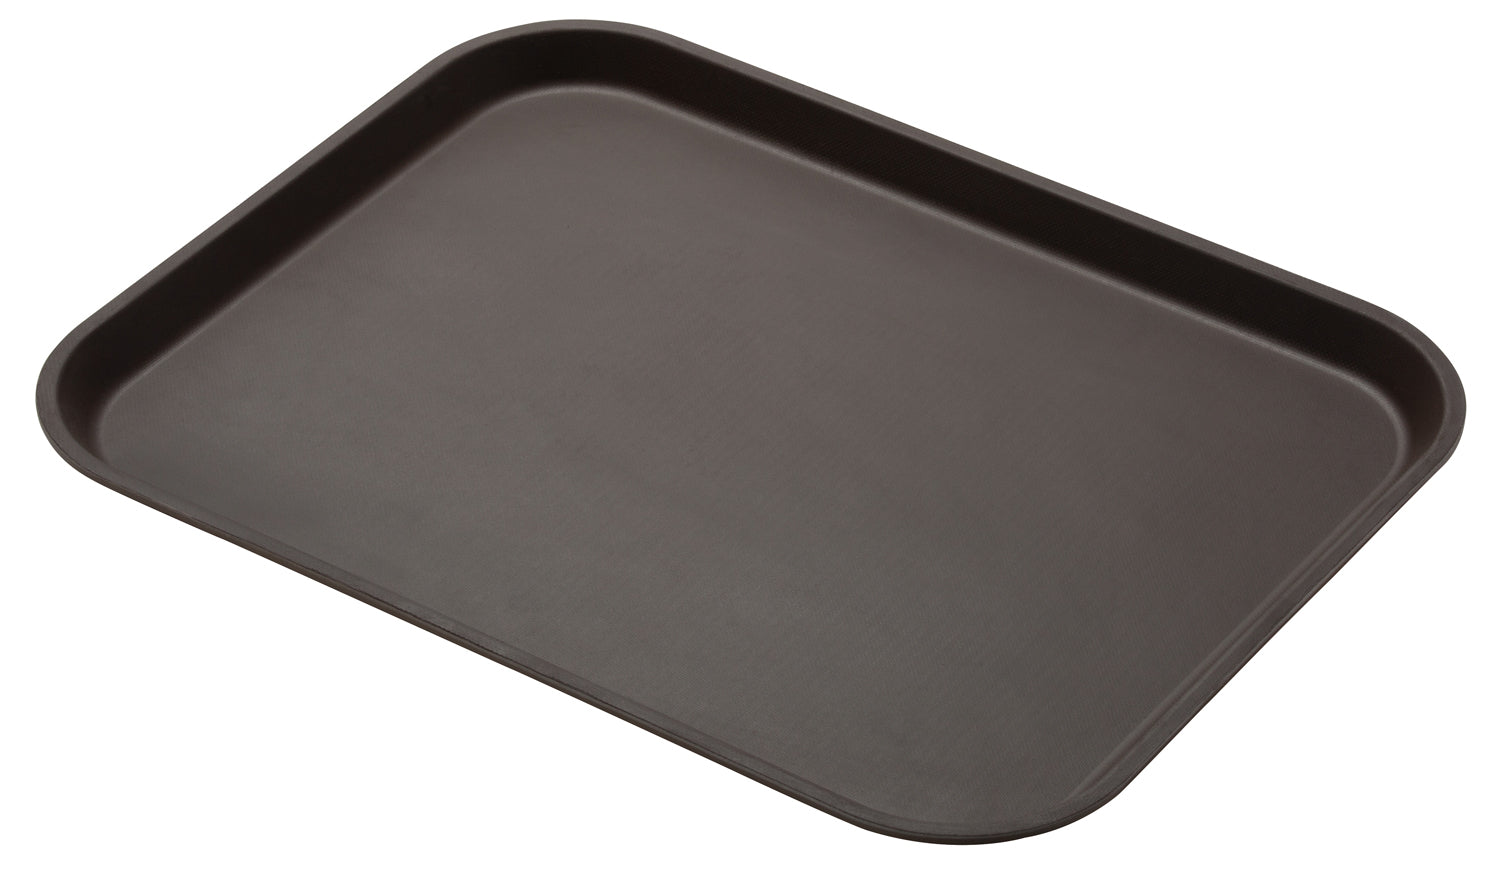 Cambro Camtread® Fiberglass Tablett mit rutschfester Gummioberfläche, rechteckig – hohes Profil 35 cm, 12 Stück im Karton - 1418CT138